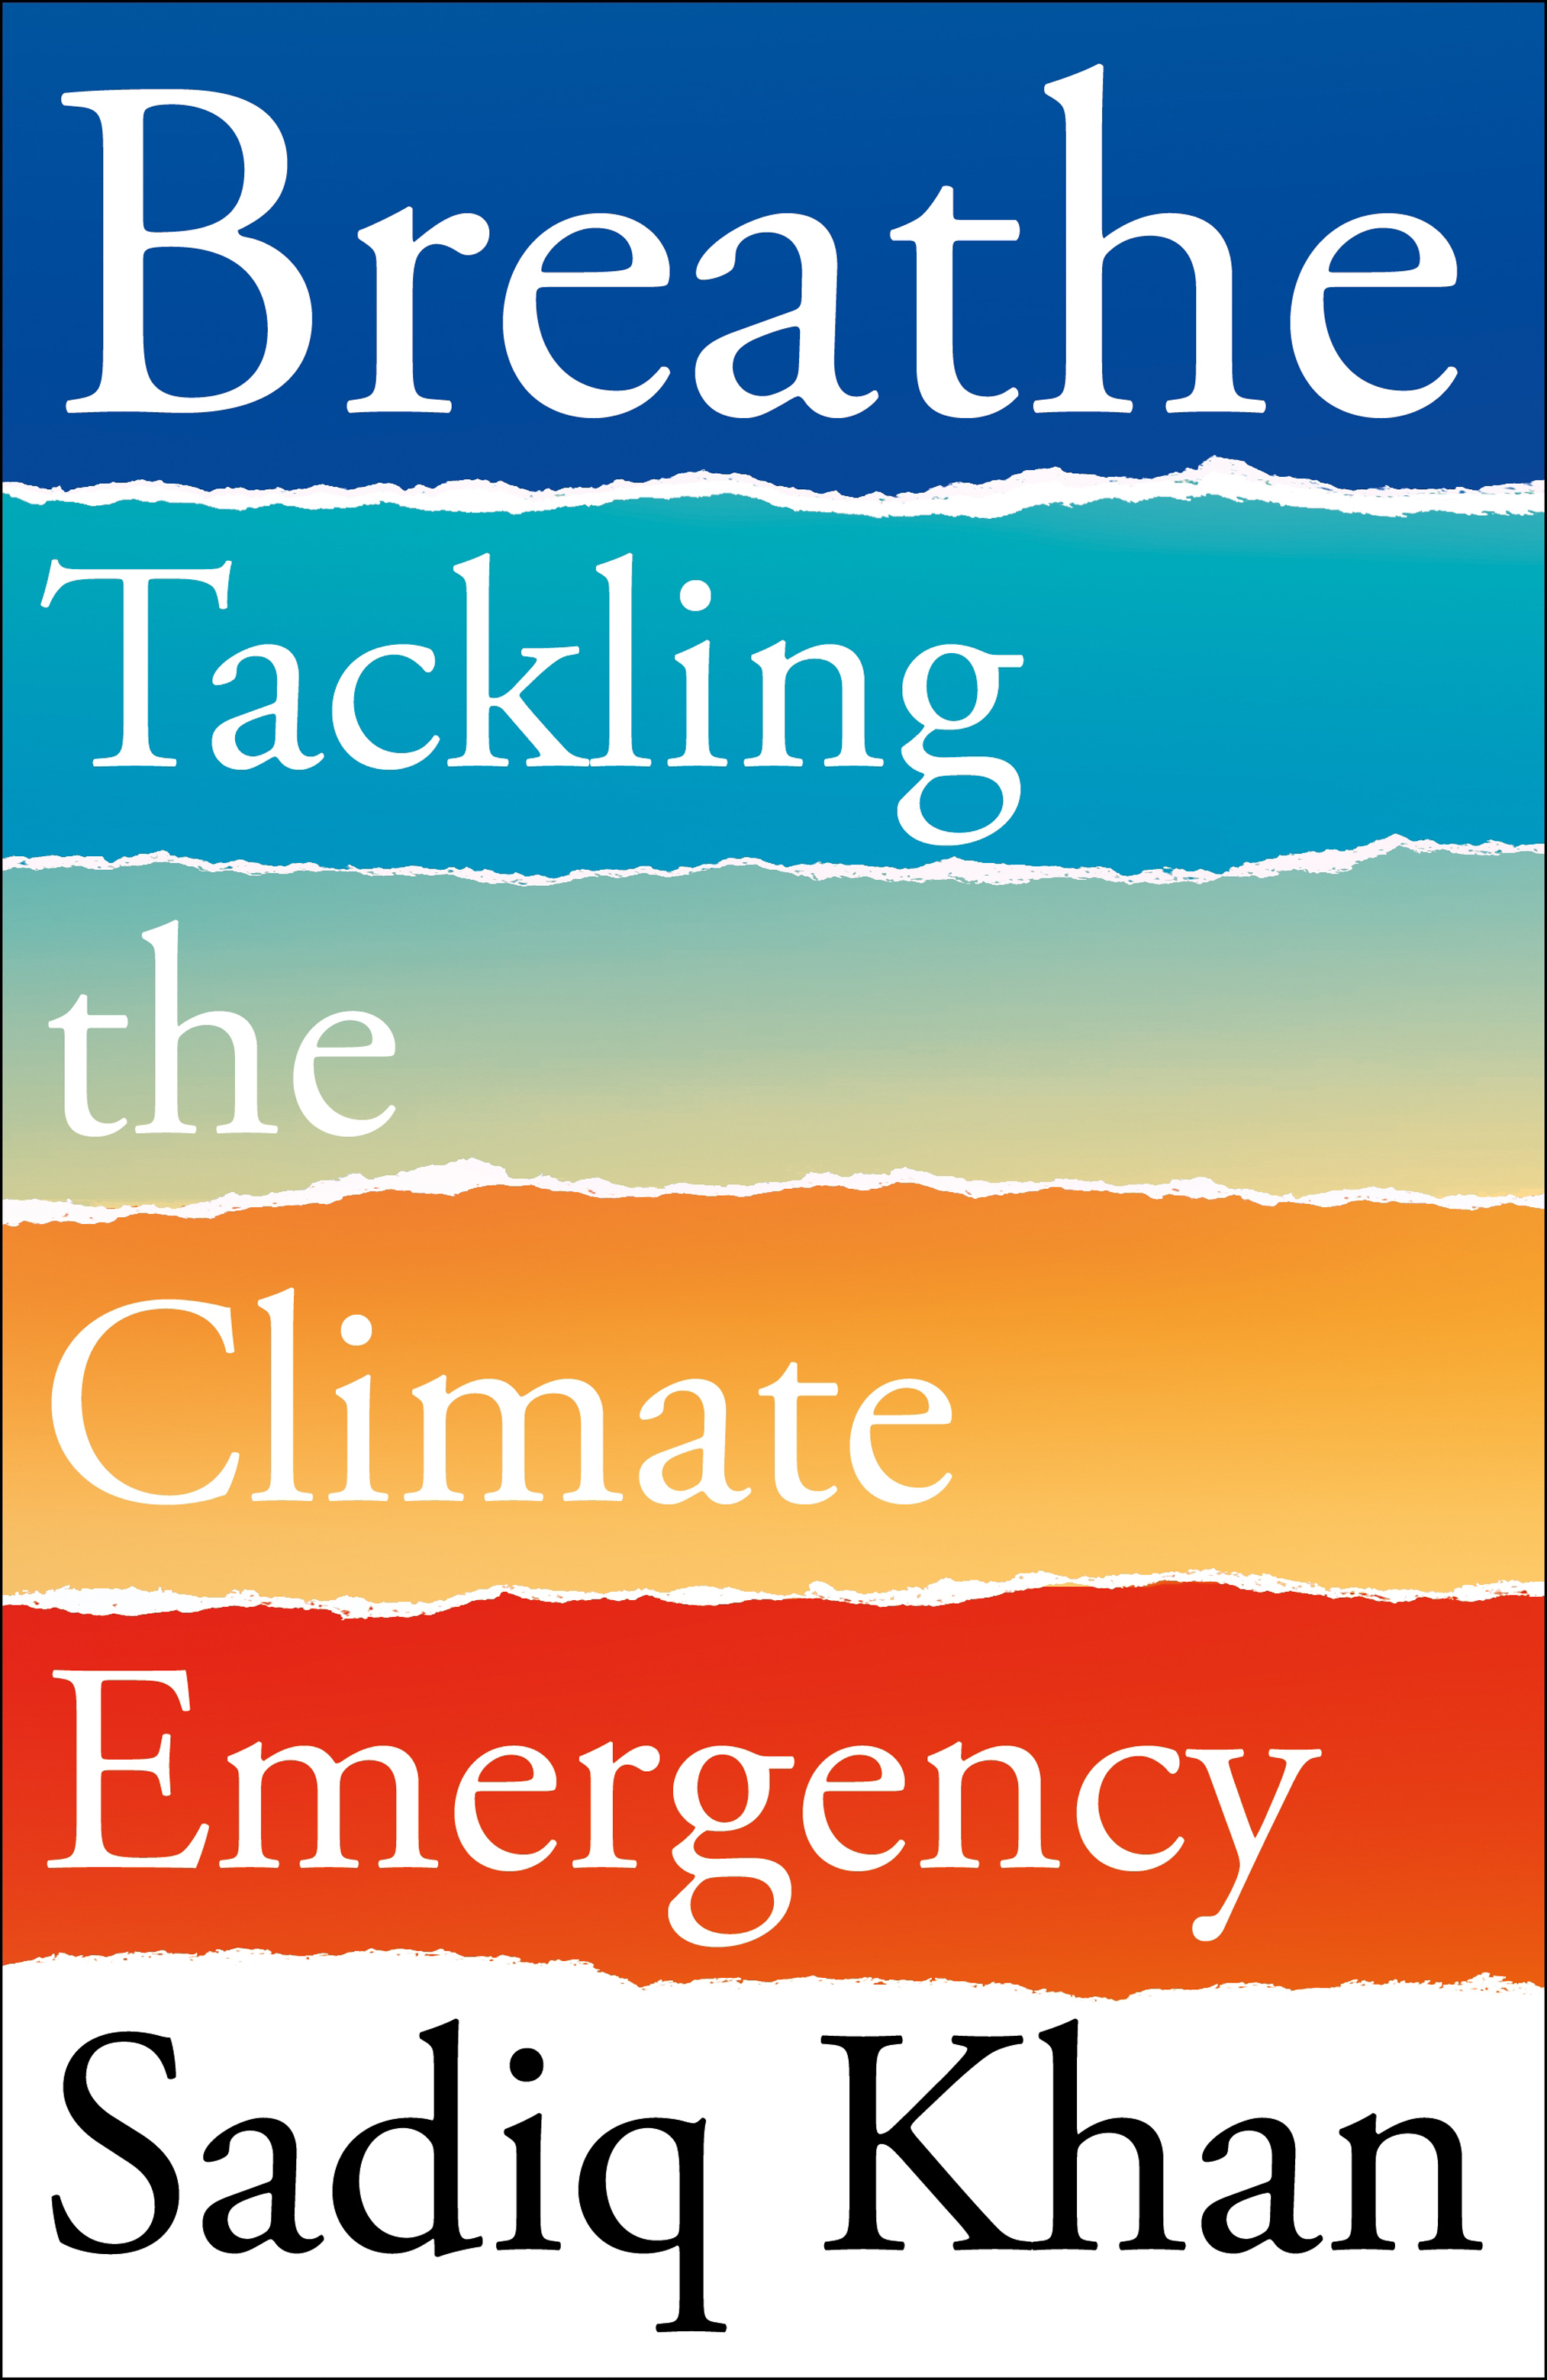 Book jacket of Breathe: Tackling The Climate Emergency by Sadiq Khan (Hutchinson Heinemann/PA)